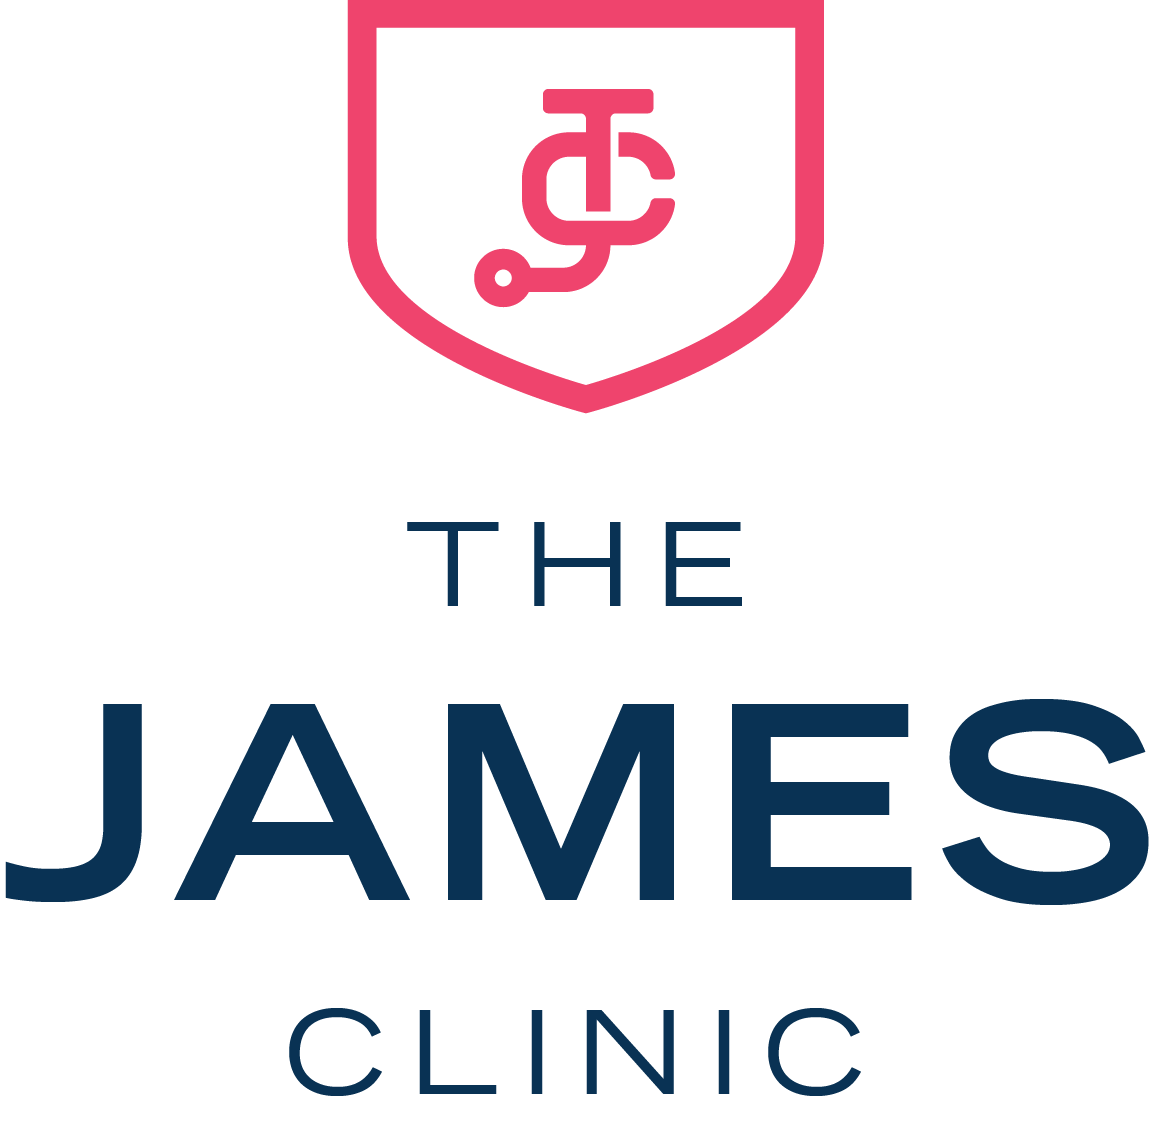 James Clinic